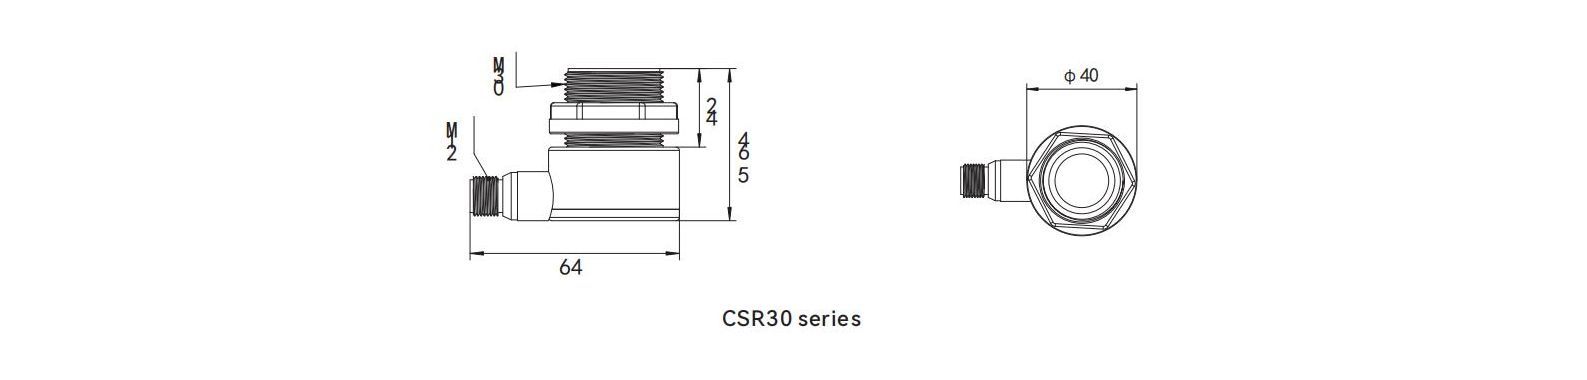 Dimensions of ultrasonic transducer sensor CSR30 series